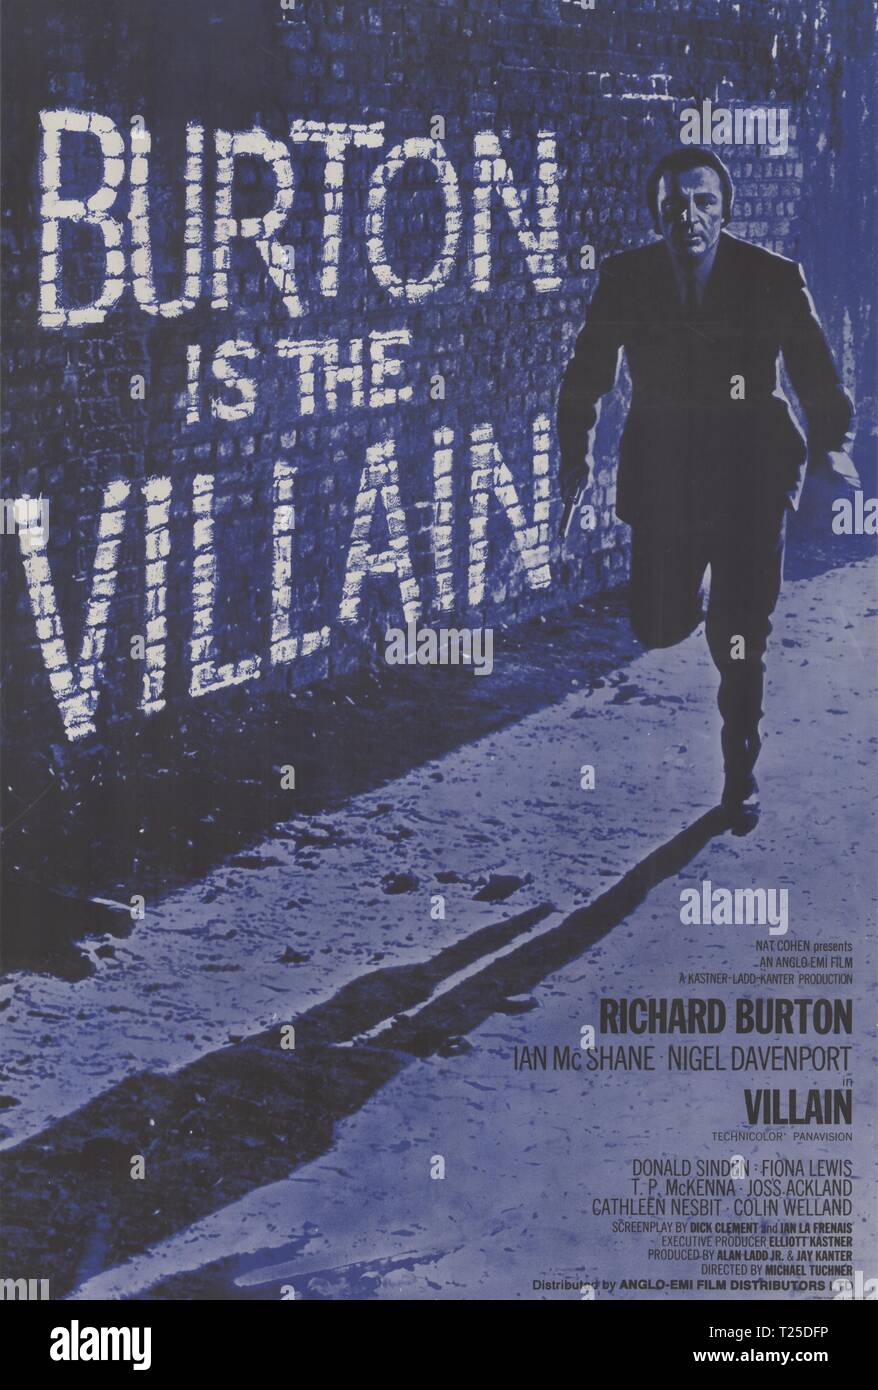 Villain (1971)  Richard Burton, Publicity information, film poster     Date: 1971 Stock Photo